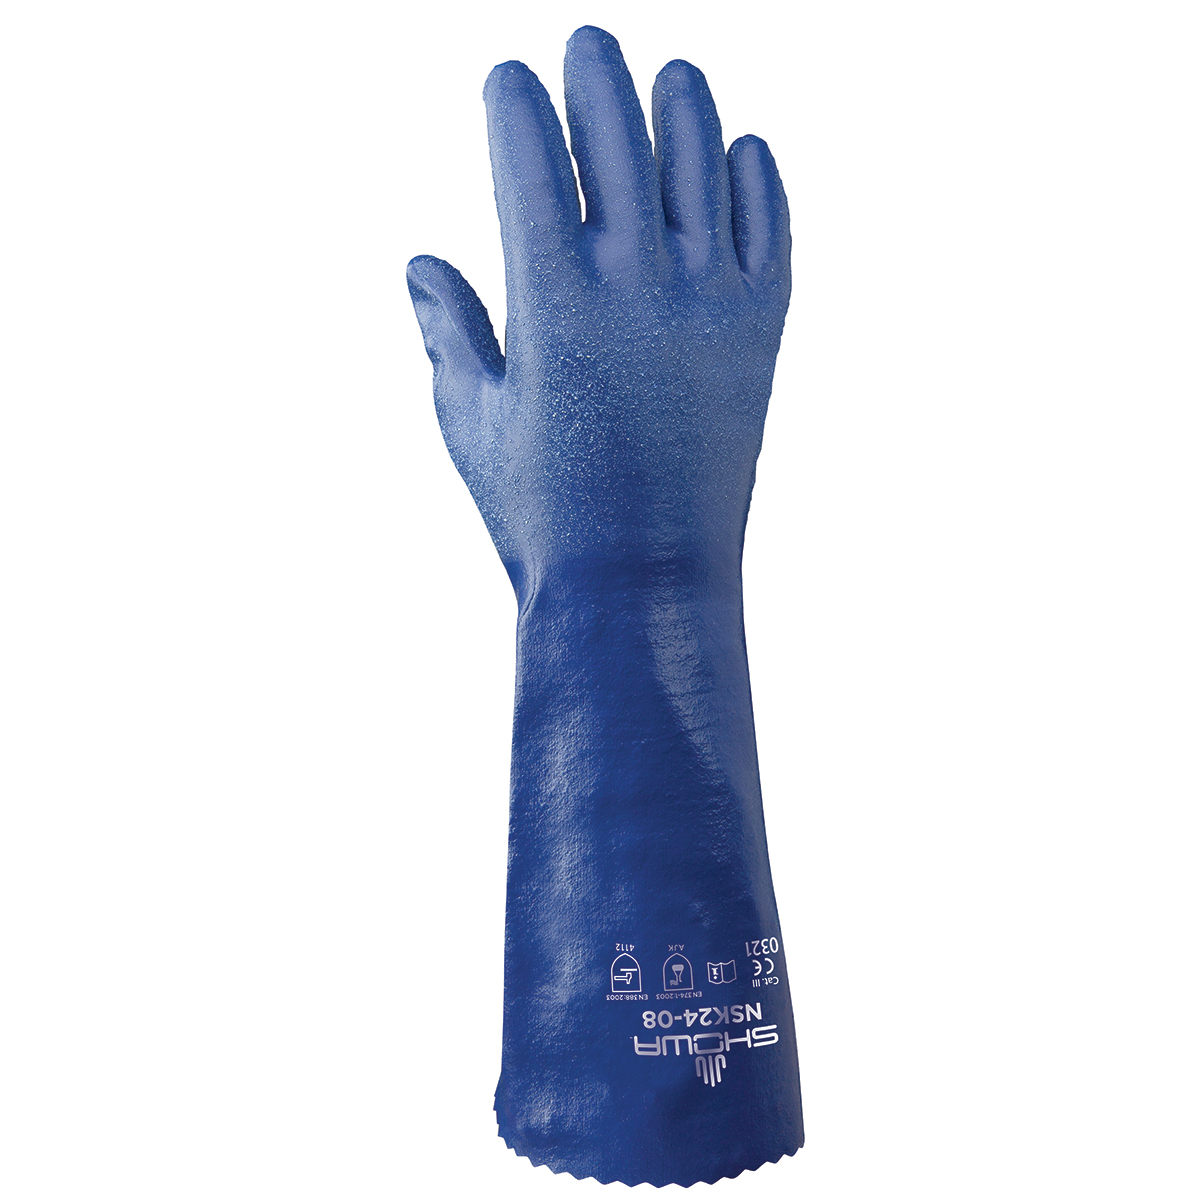 Chemical resistant nitrile, fully coated 14" gauntlet, royal blue, rough finish, interlock liner, medium